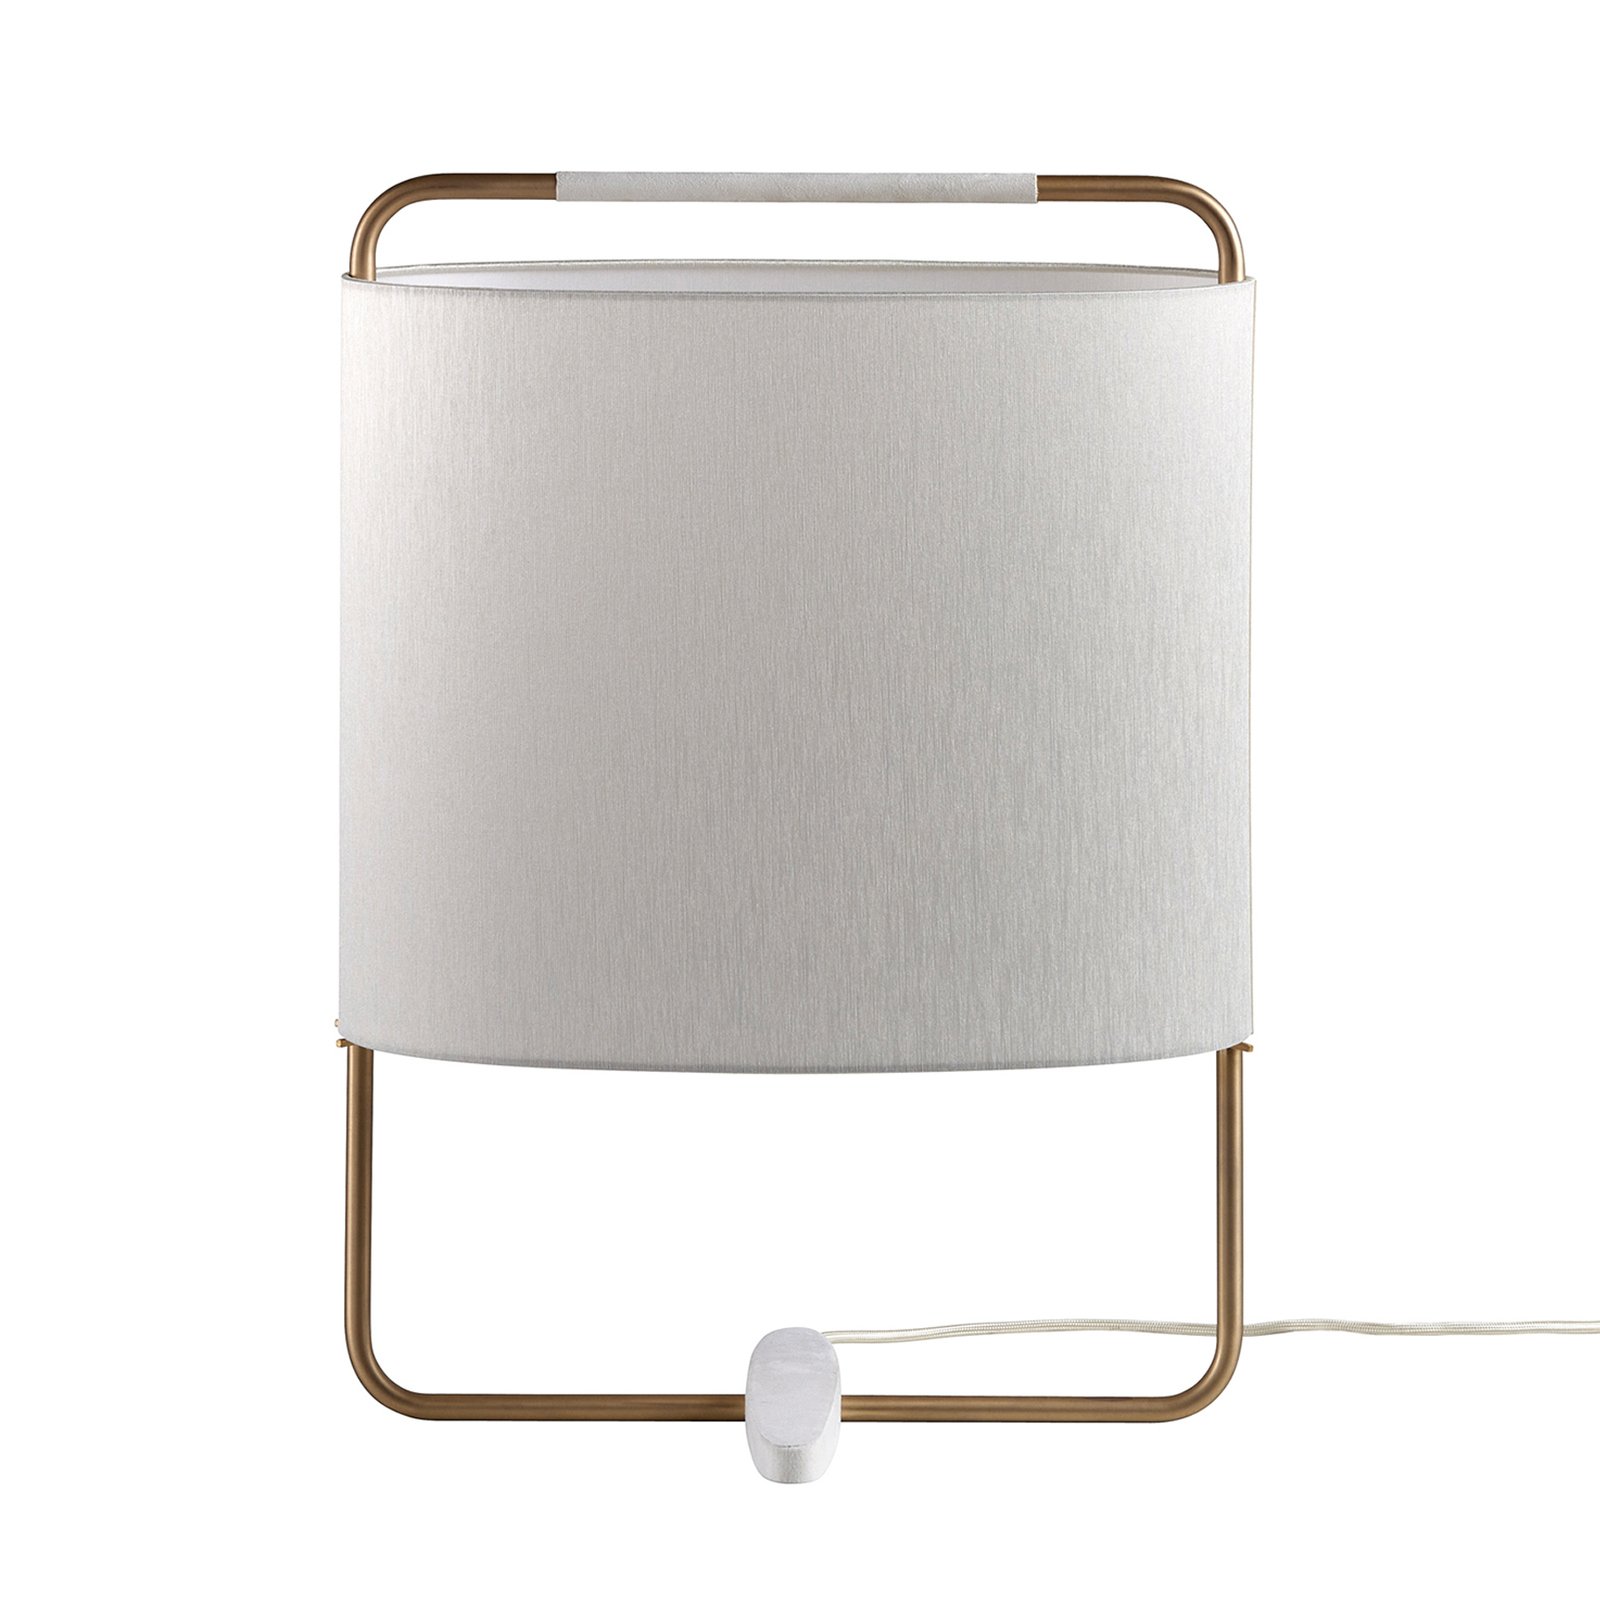 Margot bordslampa, höjd 55cm, beige, guld, vit